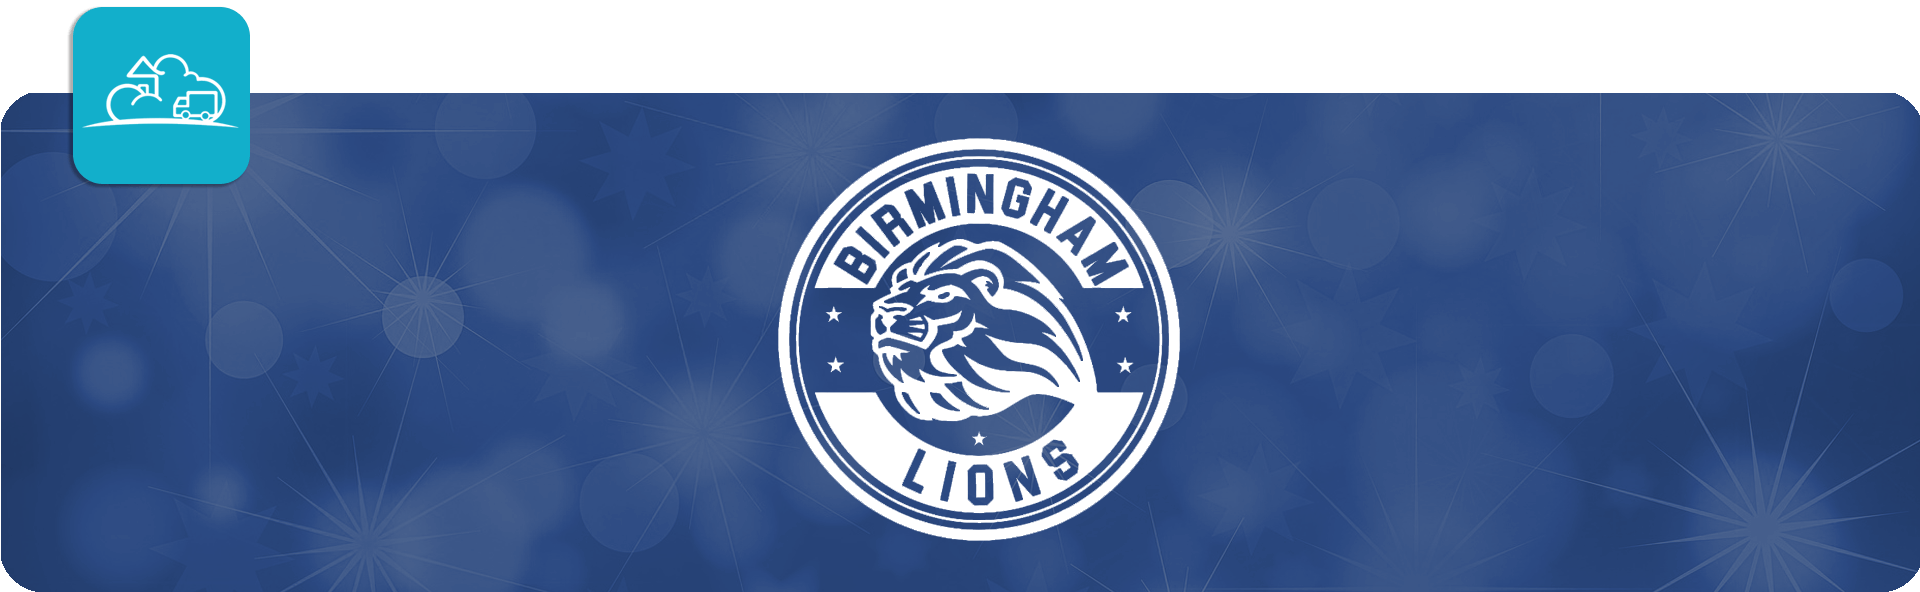 Birmingham Lions Womens American Football Team logo